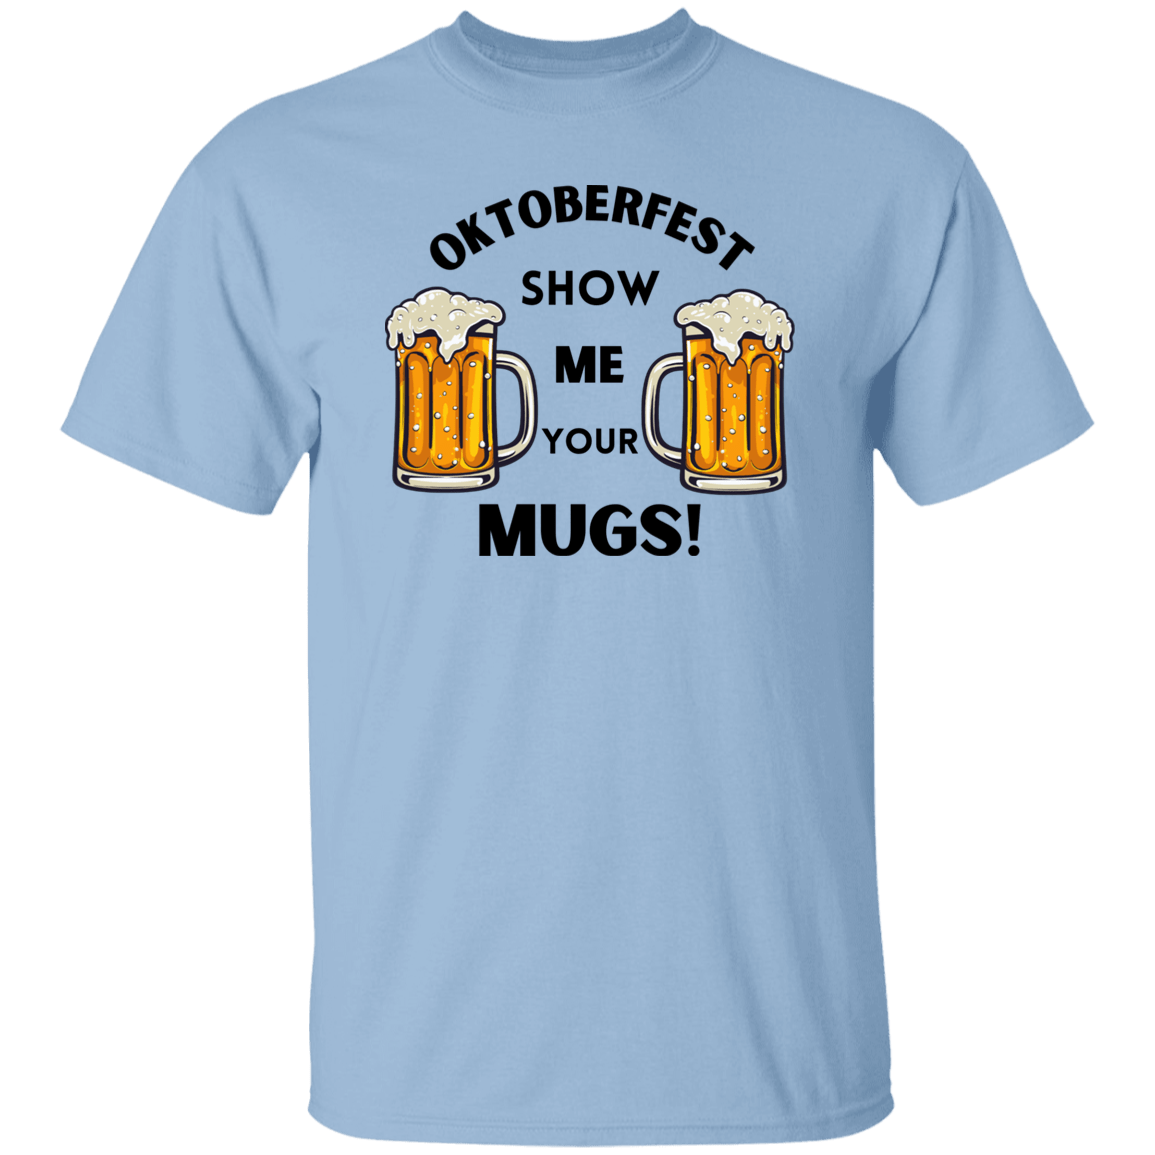 Show me Your MugsT-Shirt